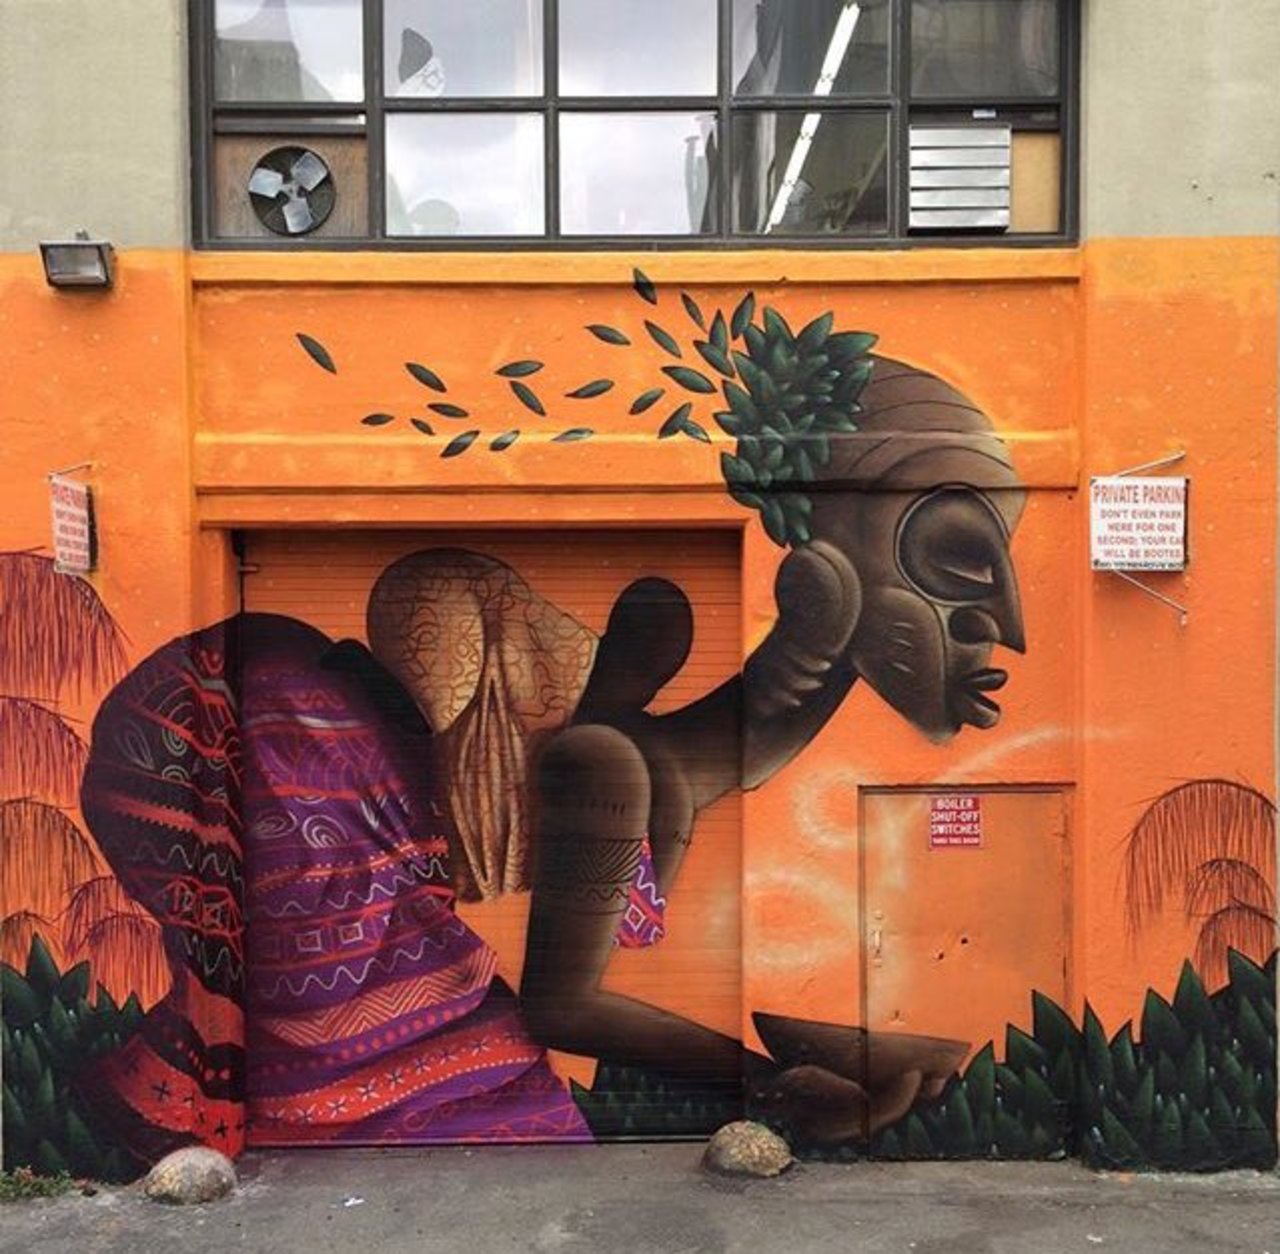 RT @chinatoniq: New Street Art by Alexandre Keto in NYC 

#art #graffiti #mural #streetart https://t.co/1Uz3DFgr3N googlestreetart chinatoniq